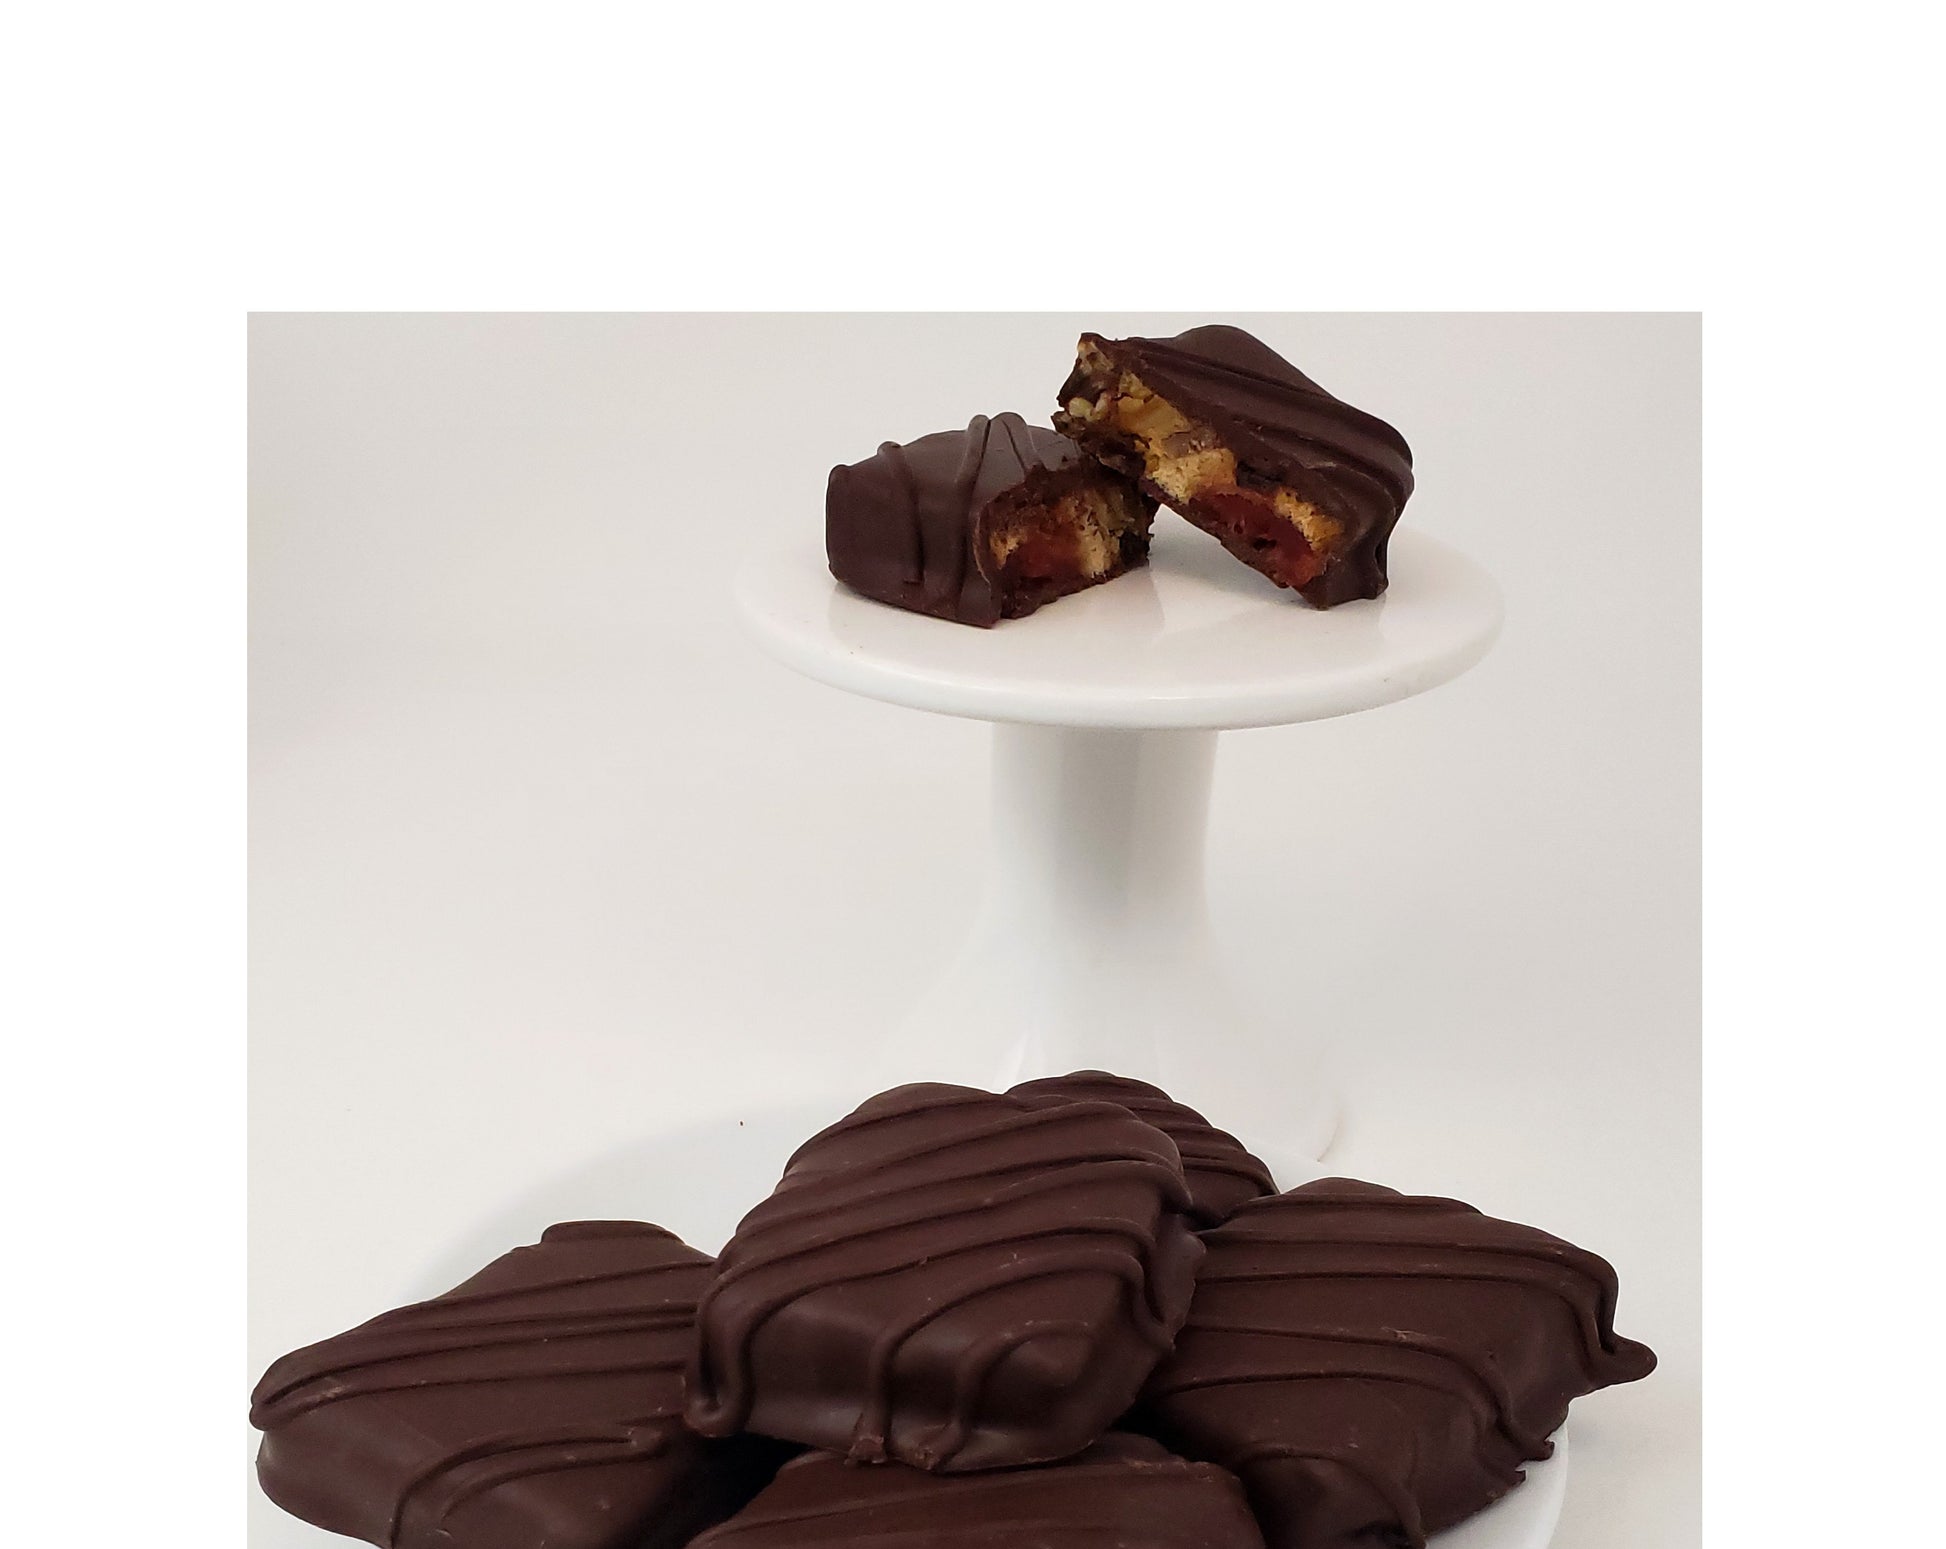 Dark Chocolate Covered Fruitcake Slices - JaneParker.com